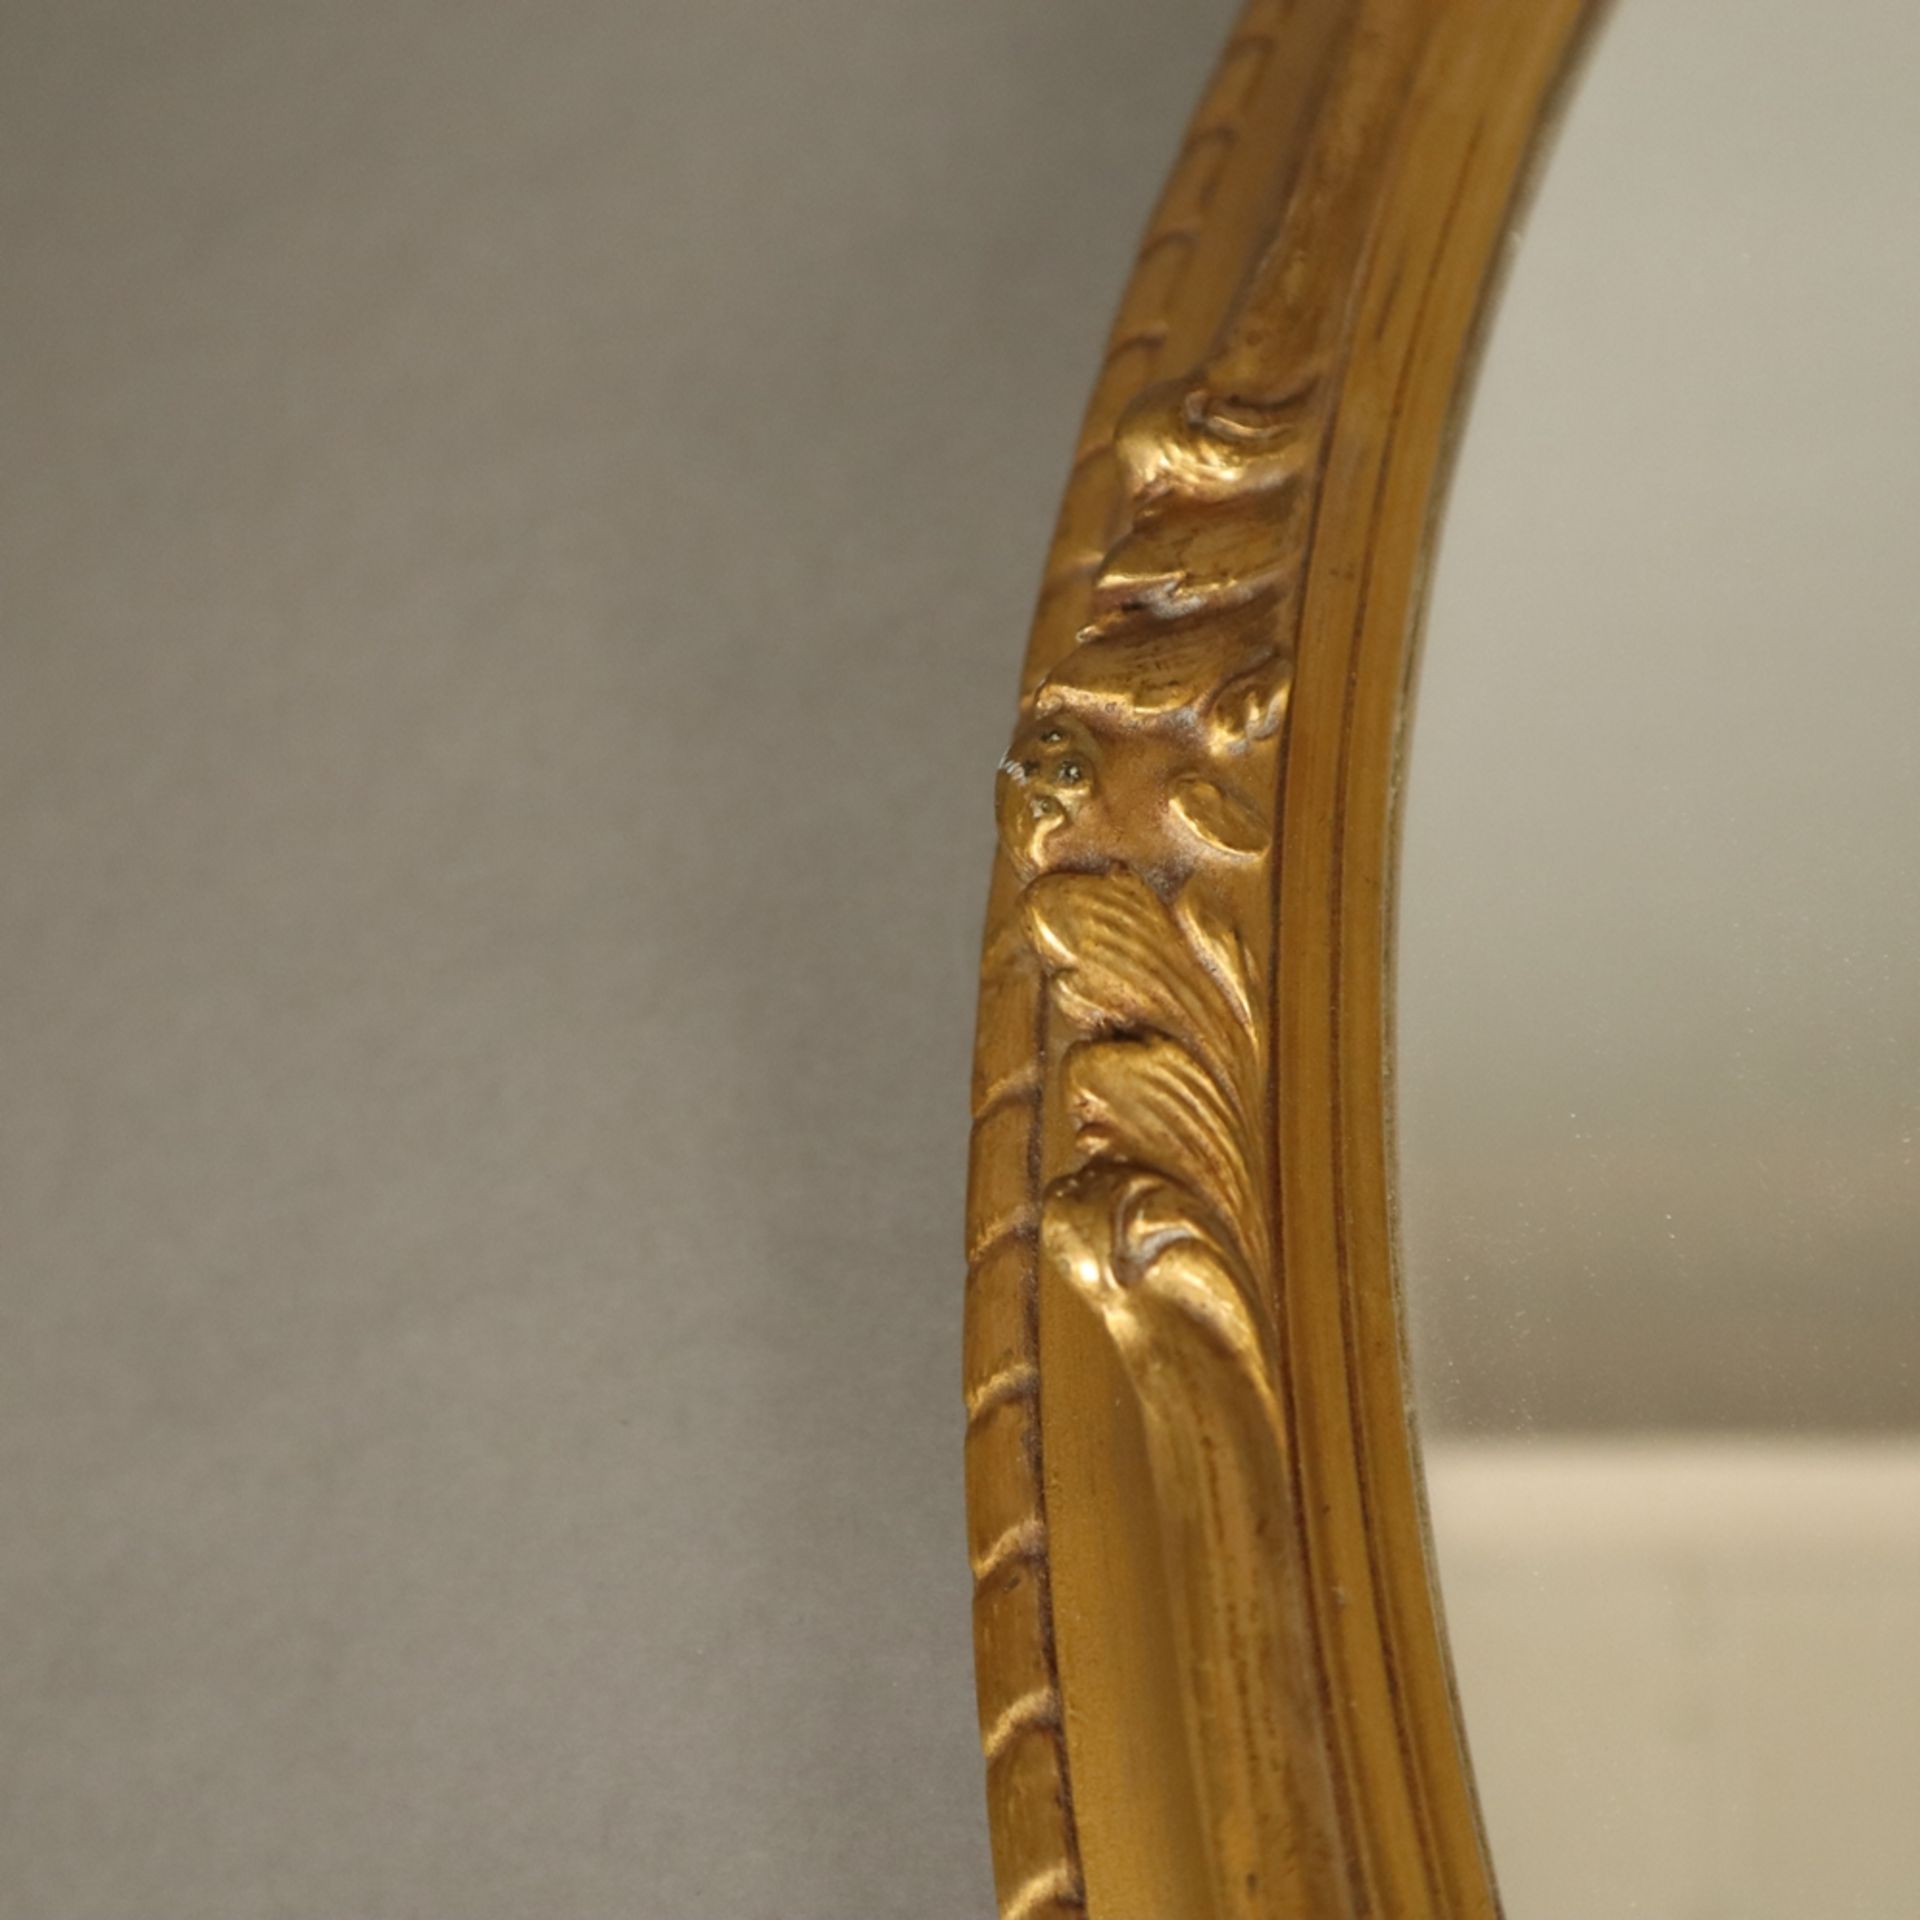 Wandspiegel - Holz/Stuck, ovale Form mit Reliefdekor, vergoldet, min. bestoßen, ca.68x58cm - Bild 3 aus 4